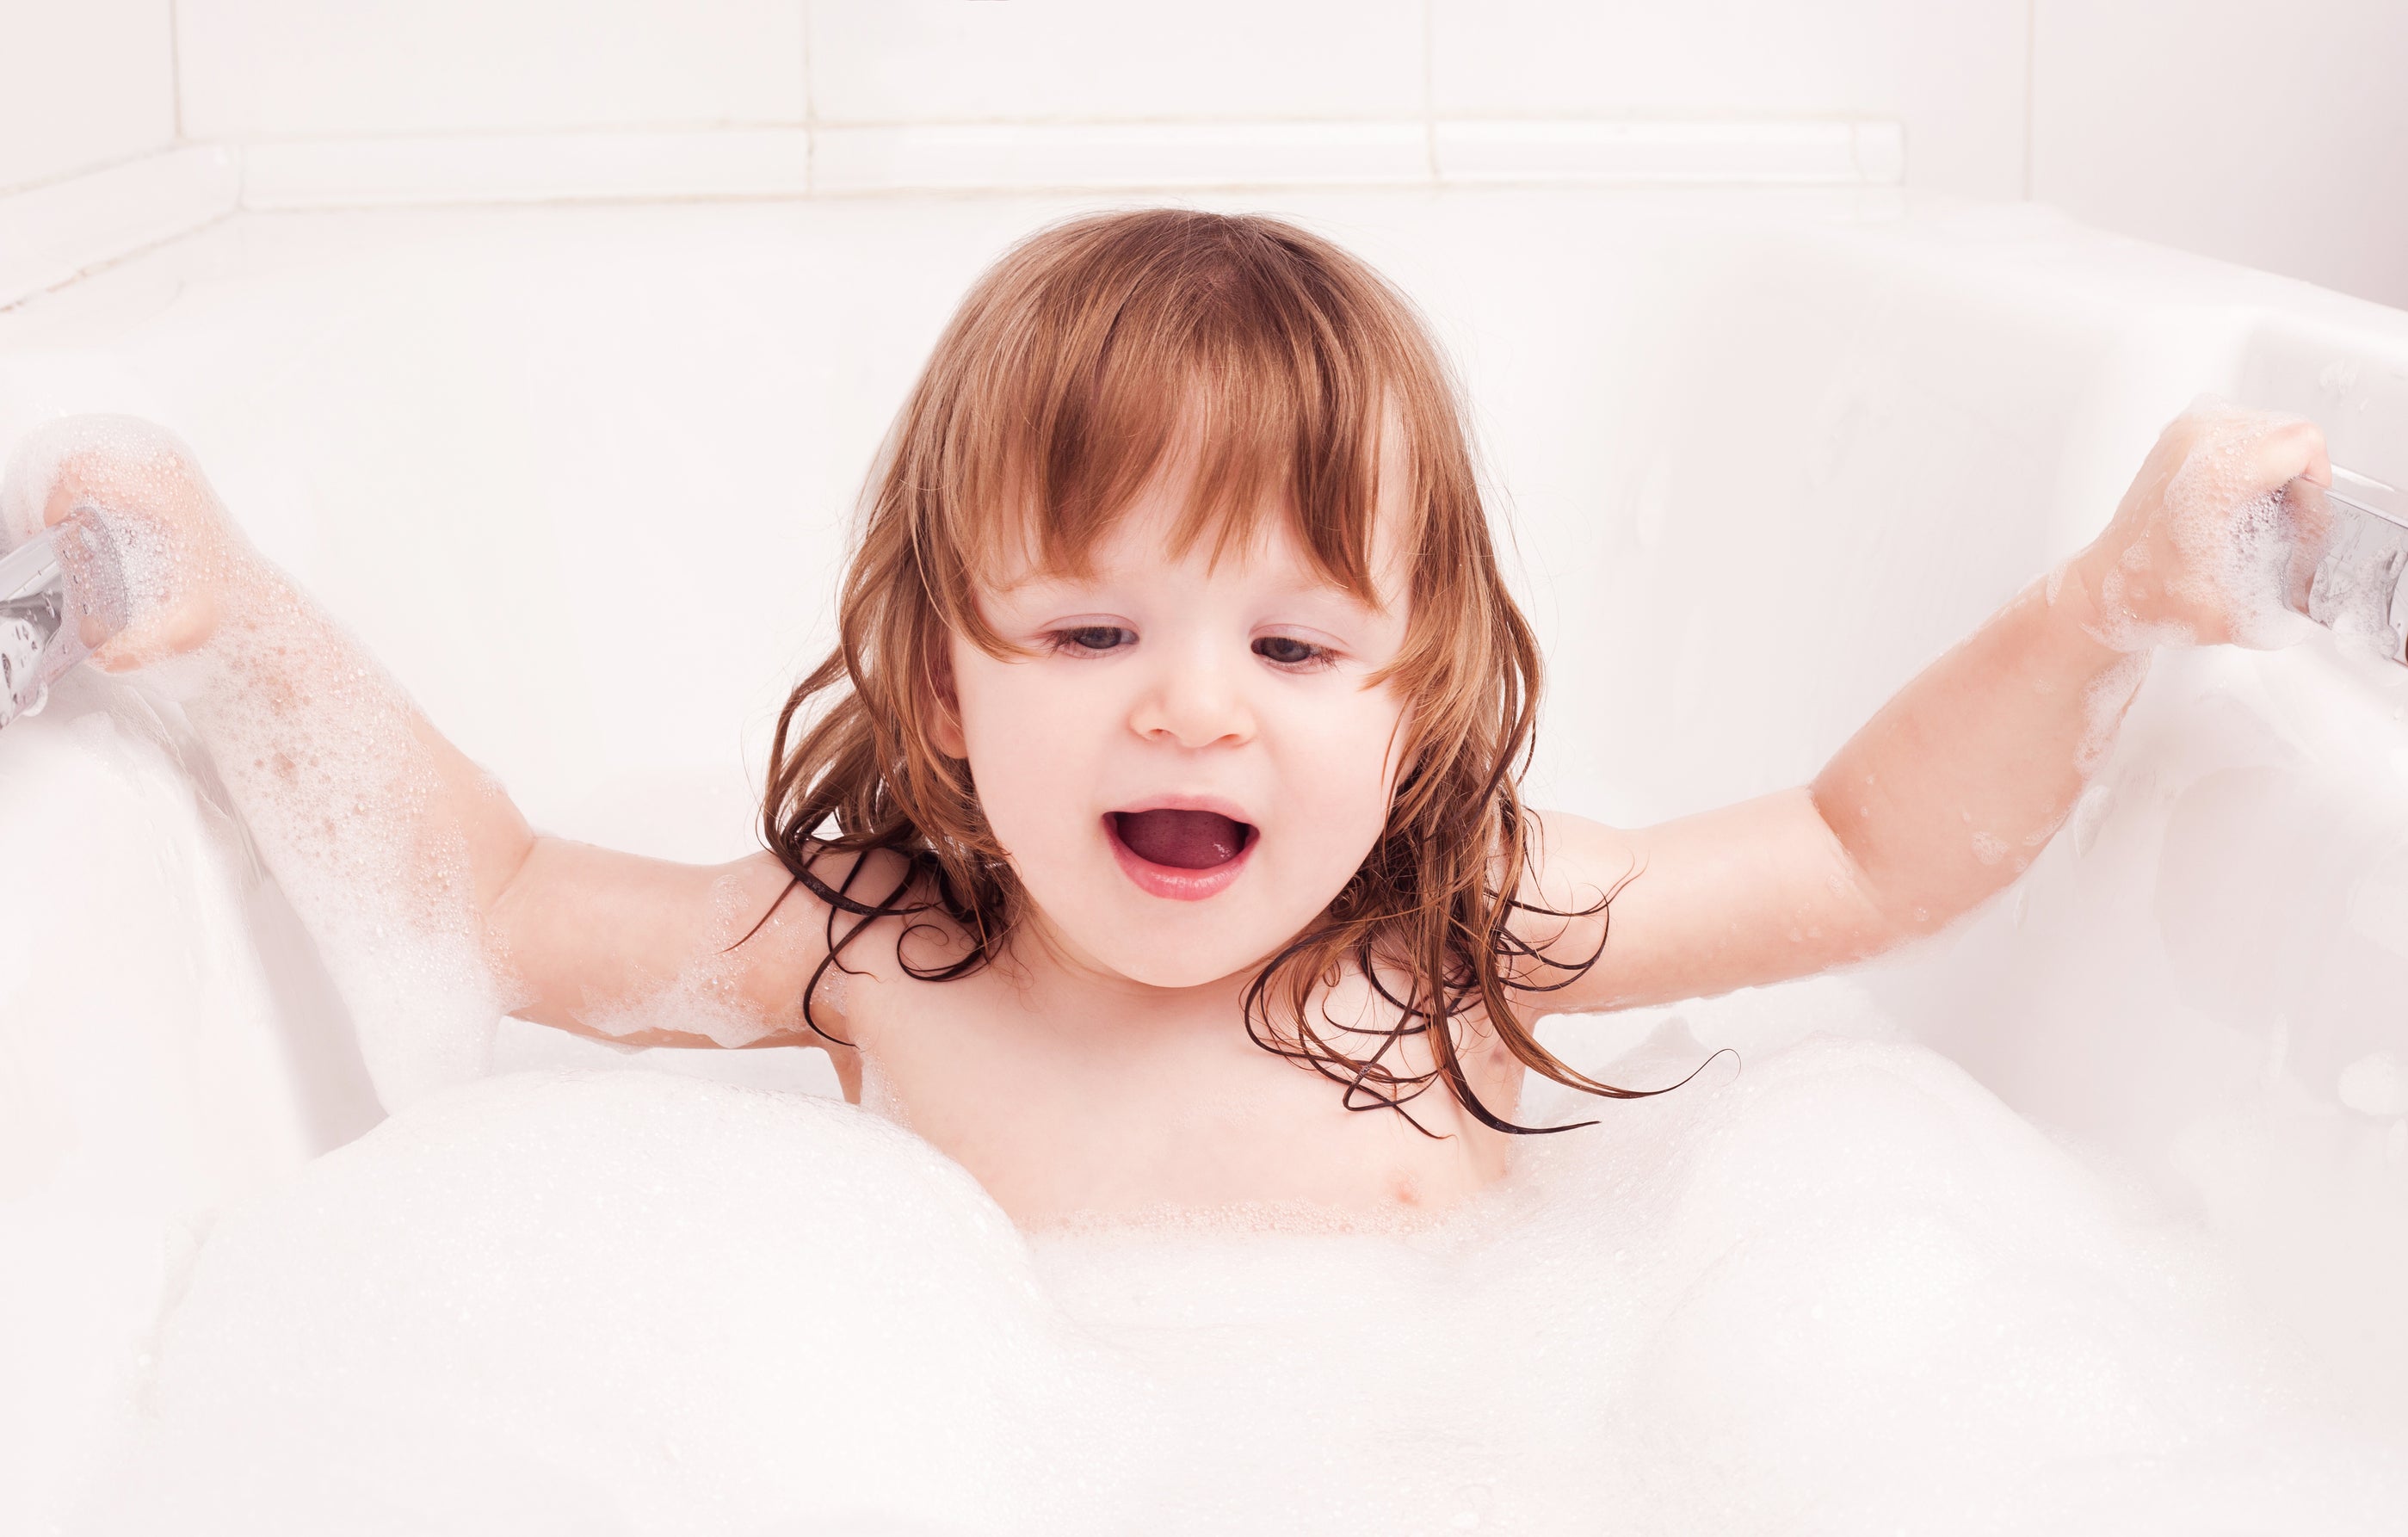 A toddler with long hair taking a bubble bath in a white bathtub.